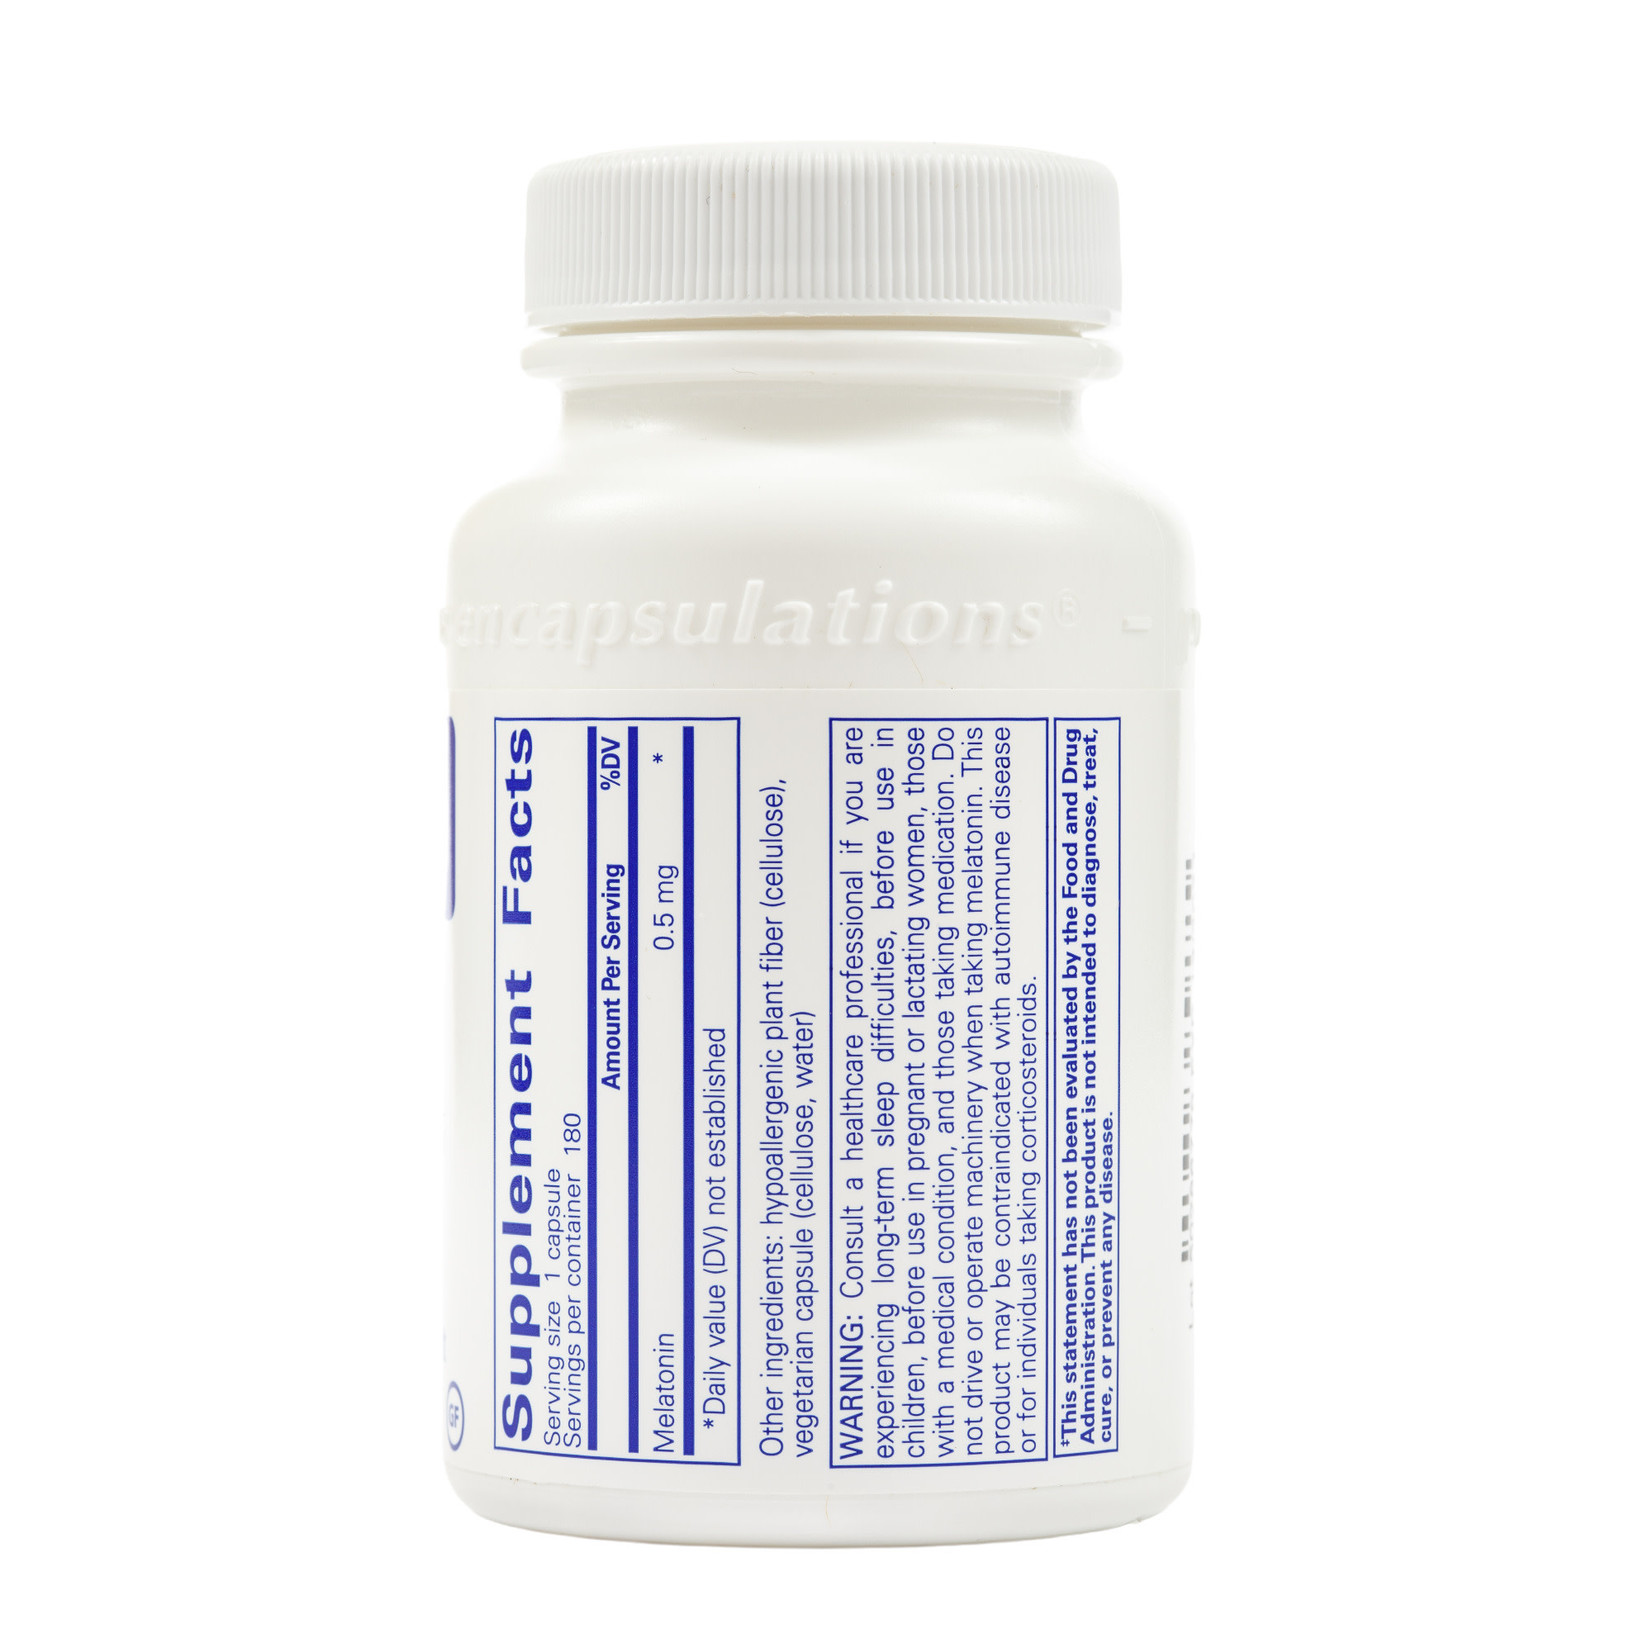 Pure Encapsulations Melatonin 0.5 mg 180c Pure Encapsulations